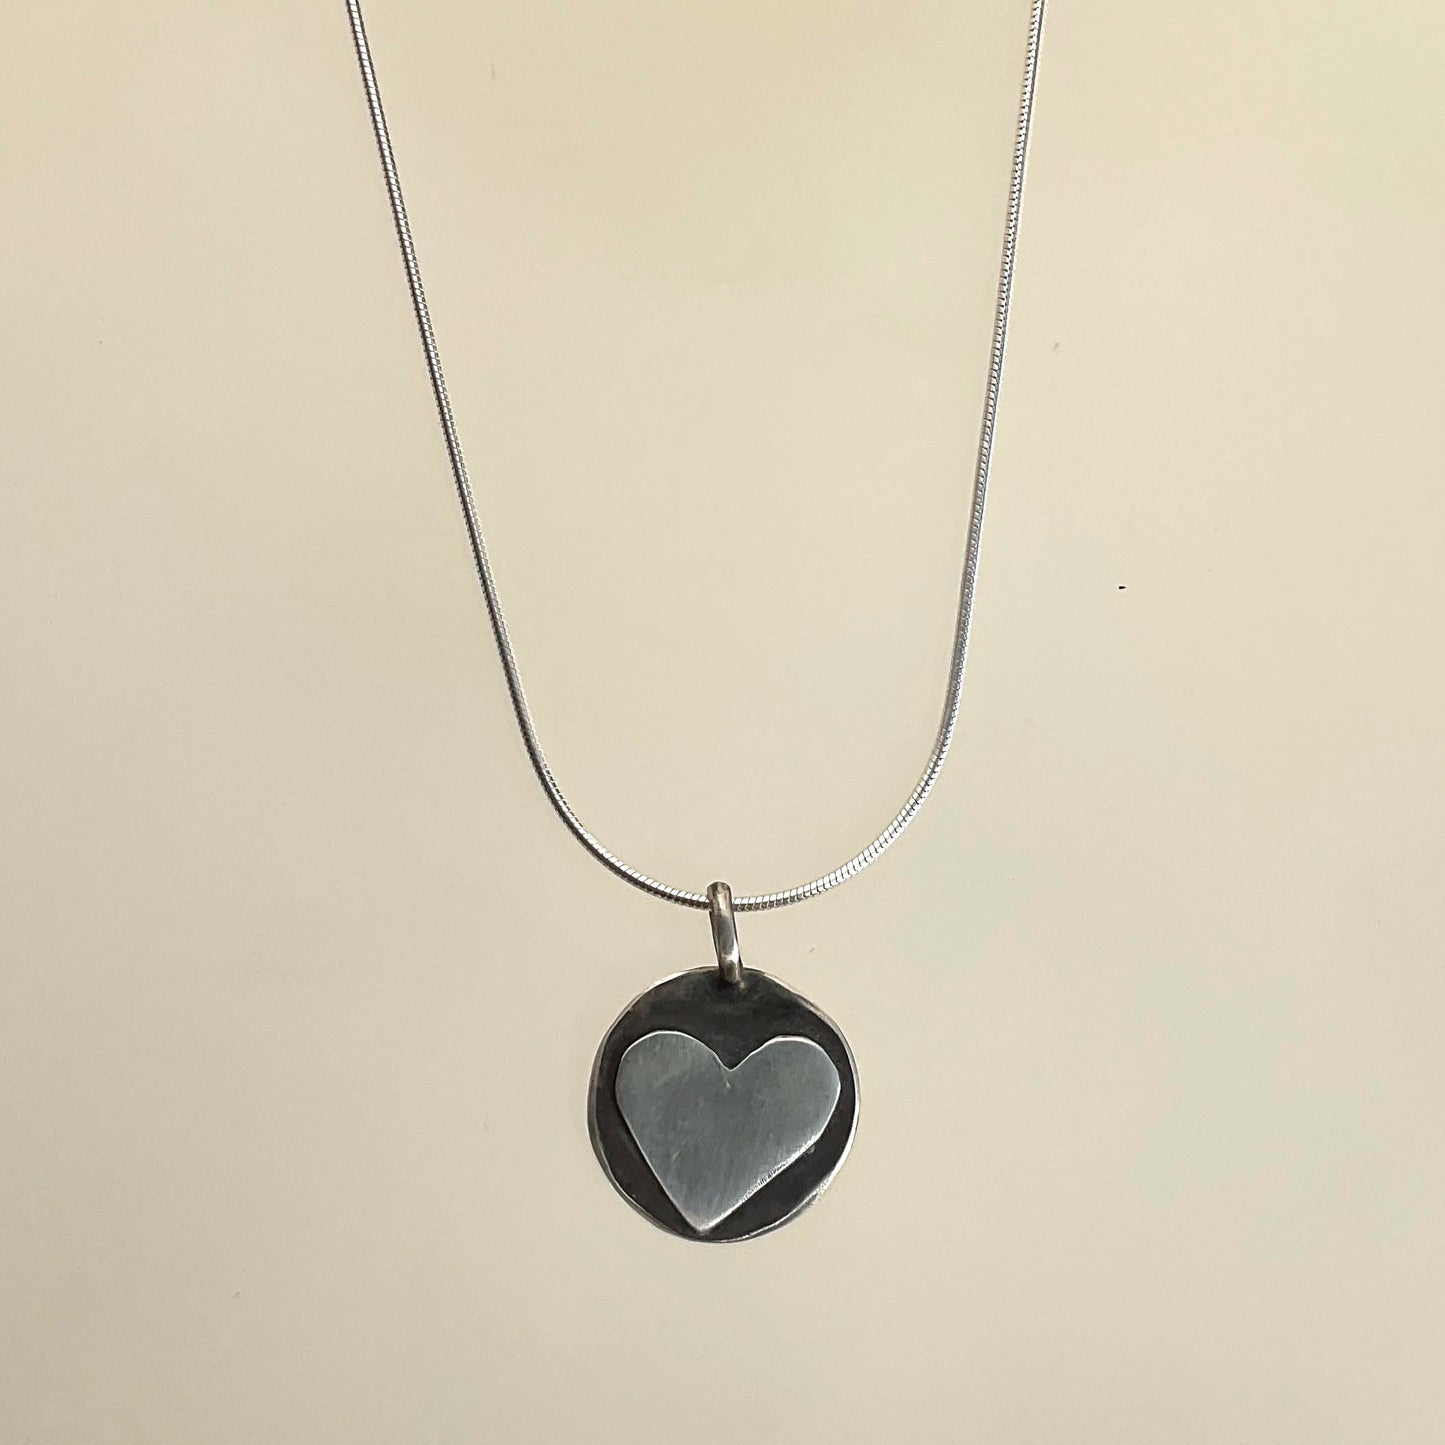 Galili Ellis, Circular Heart Pendant Necklace